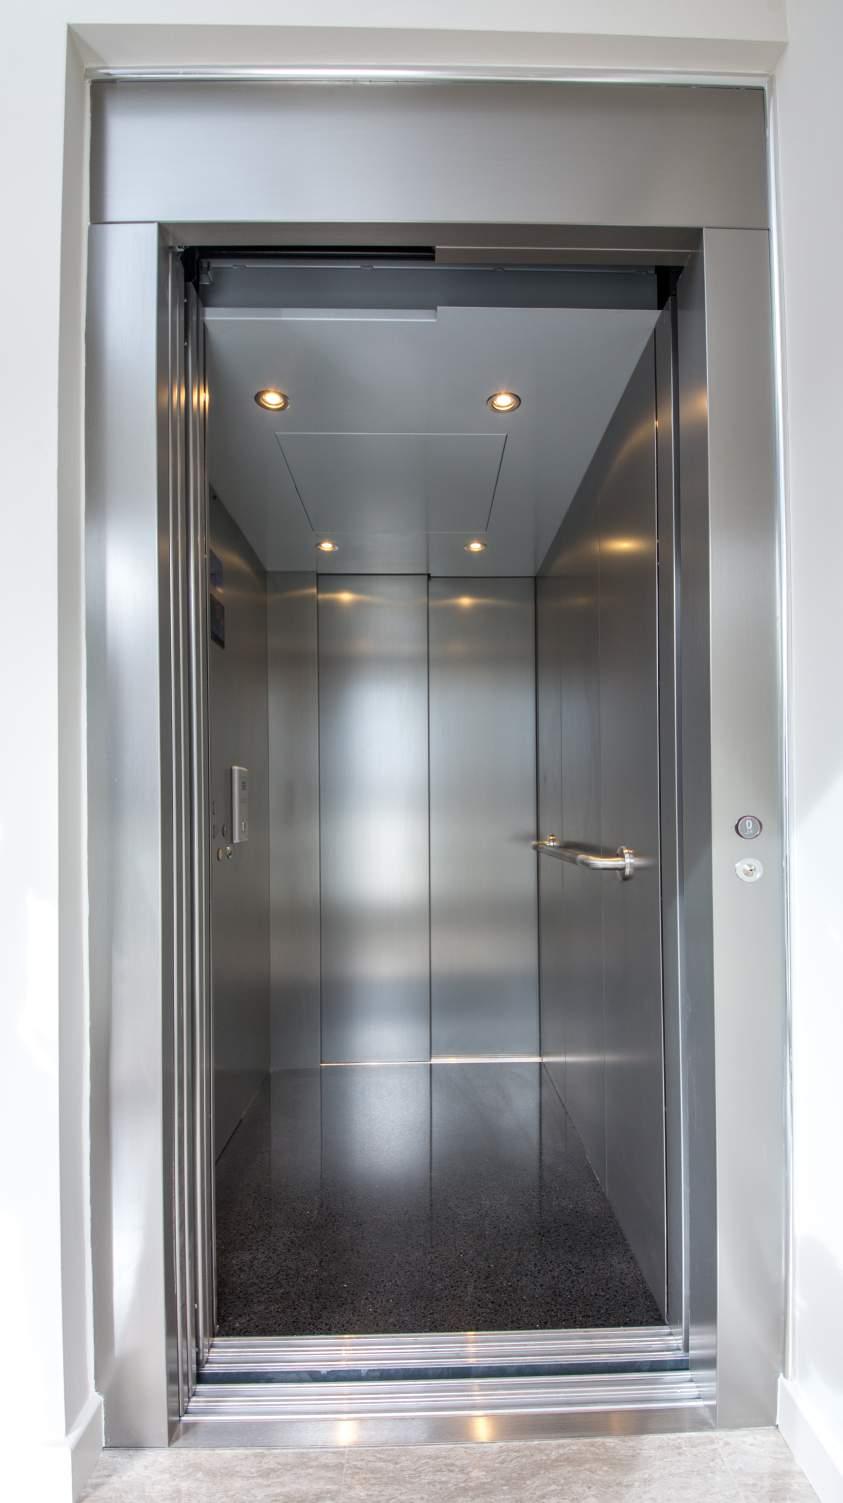 Platinum elevators Speak with a lift expert today VIC: 03 8672 0372 NSW: 02 8076 9769 www.platinumelevators.com.